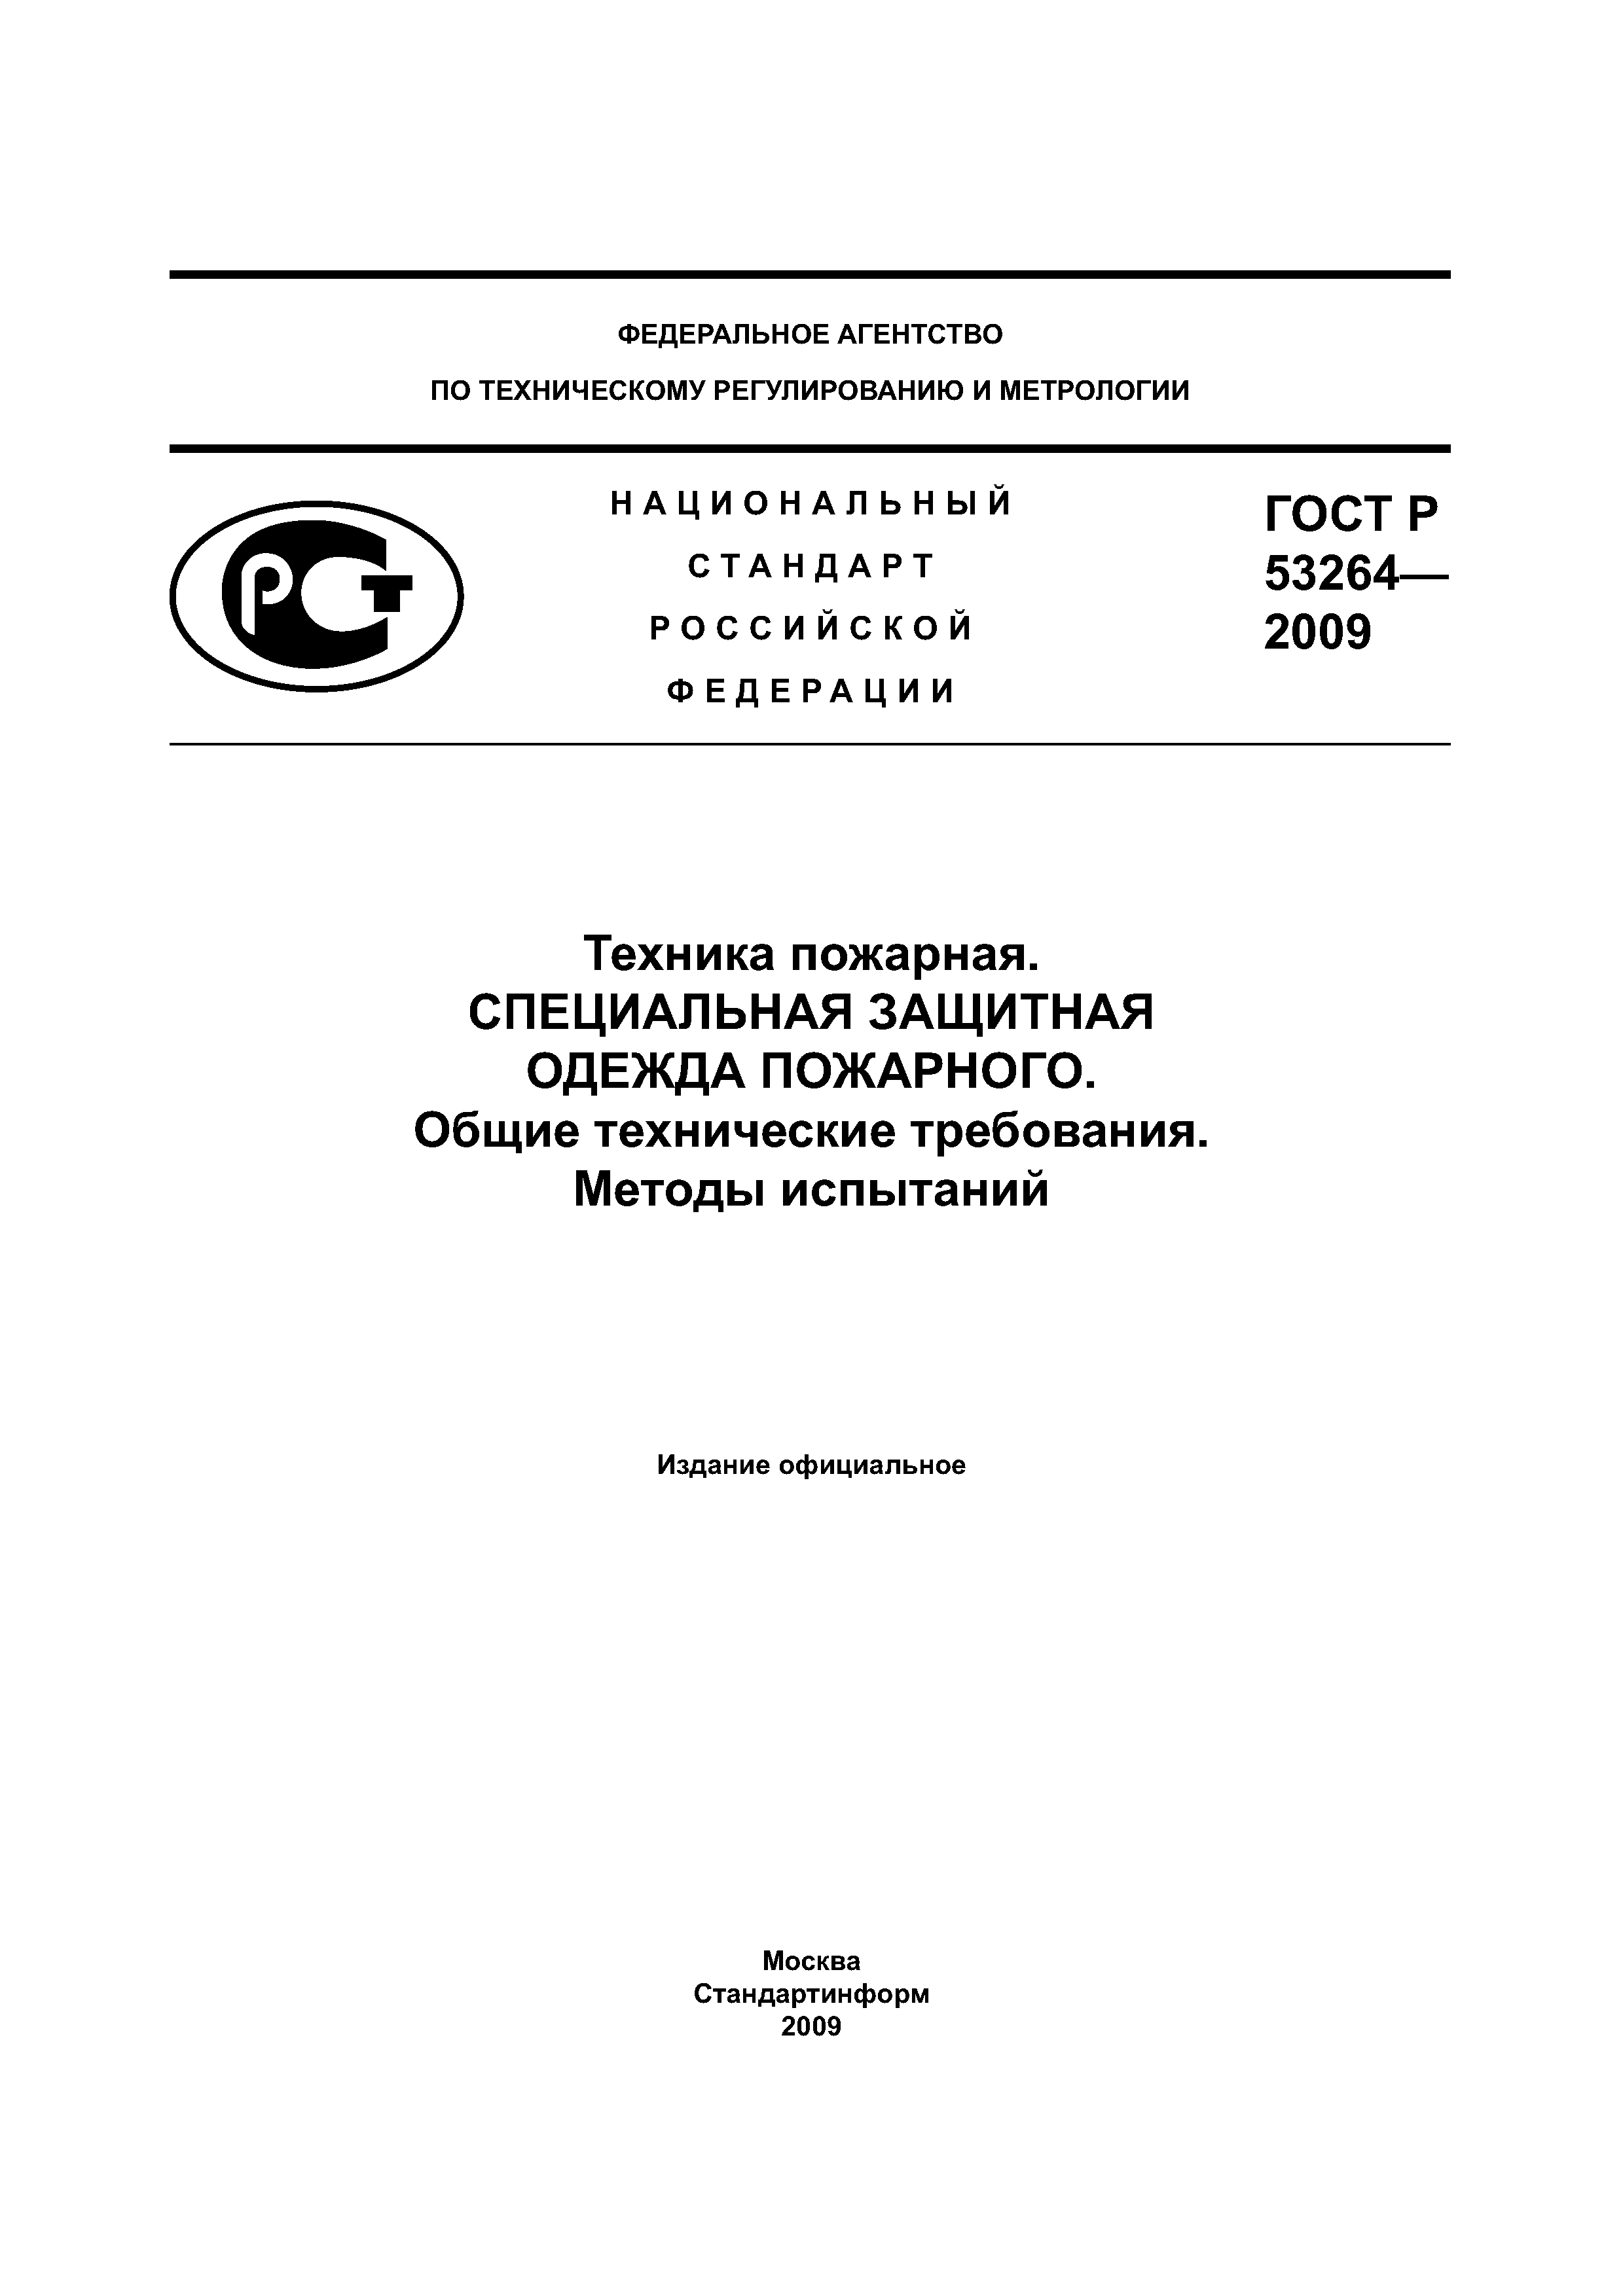 ГОСТ Р 53264-2009